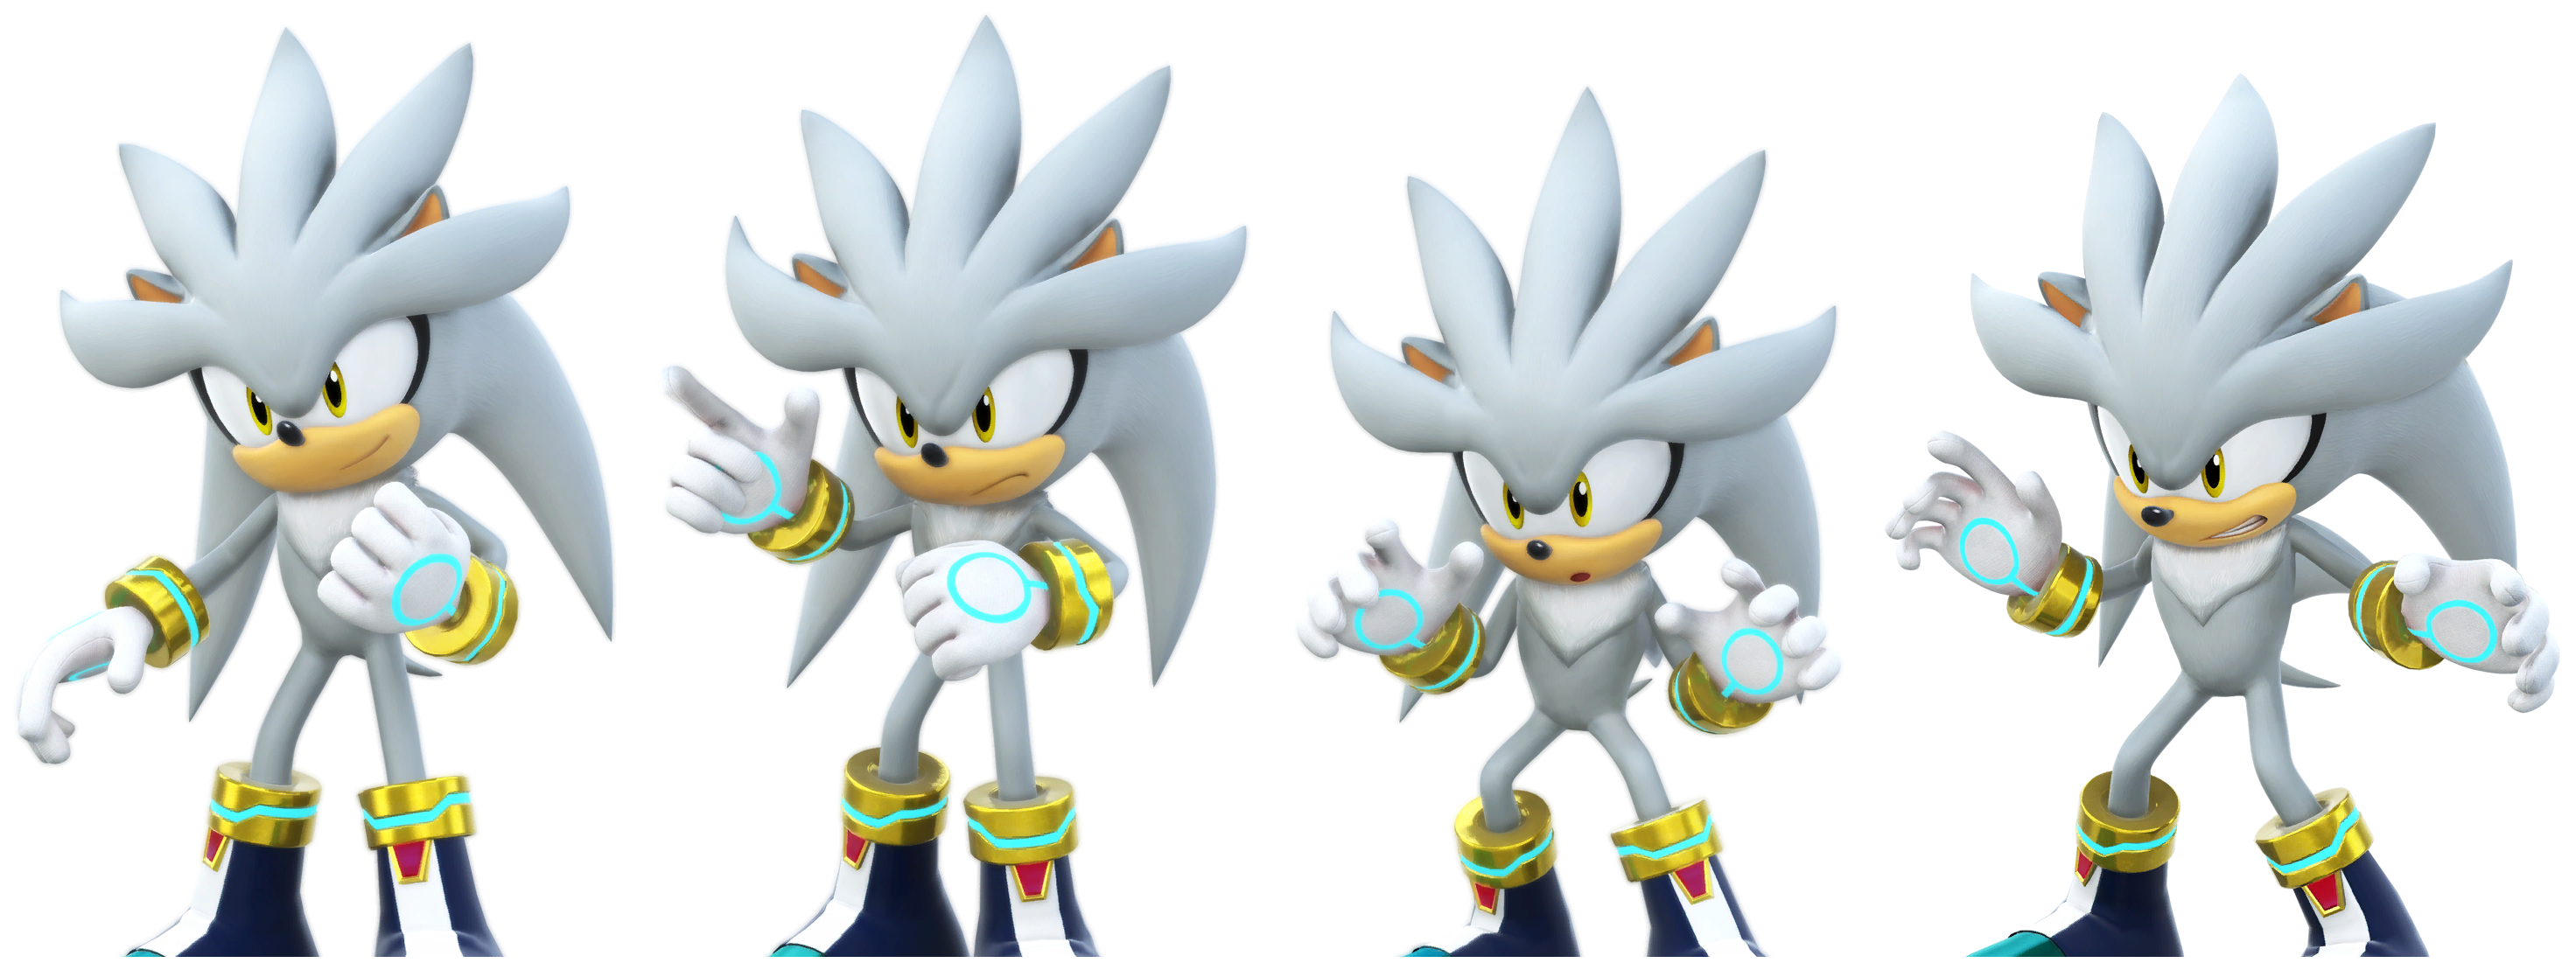 Team Sonic Racing - Silver the Hedgehog